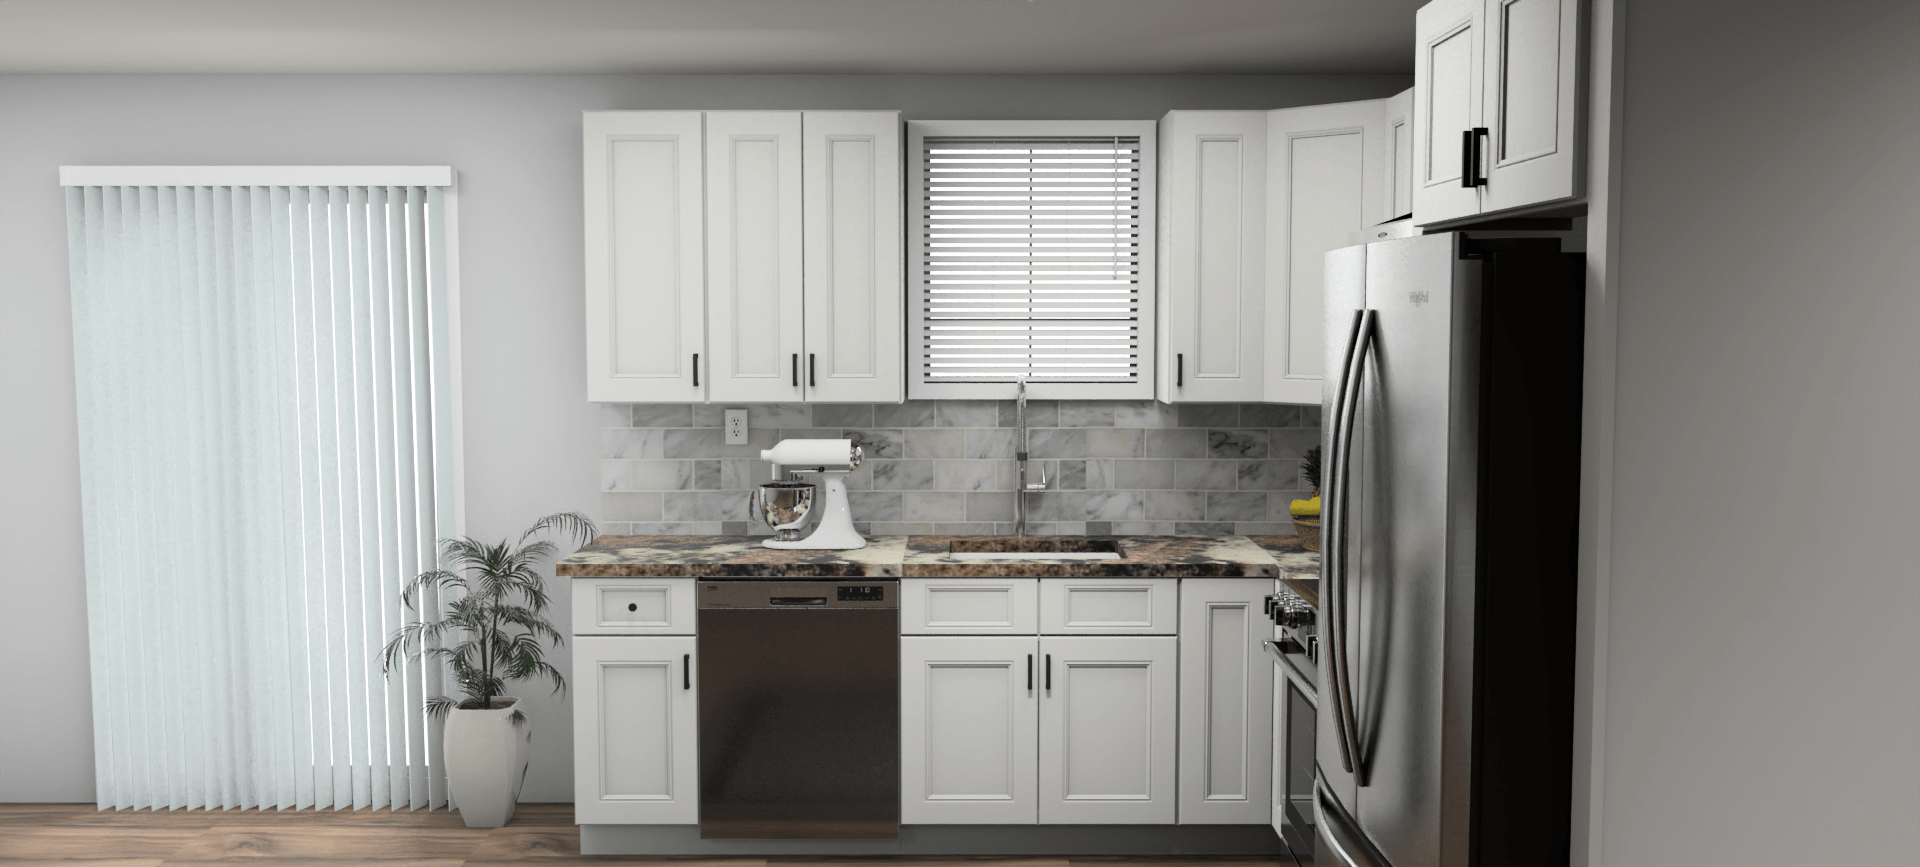 Fabuwood Allure Nexus Frost 9 x 10 L Shaped Kitchen Side Layout Photo